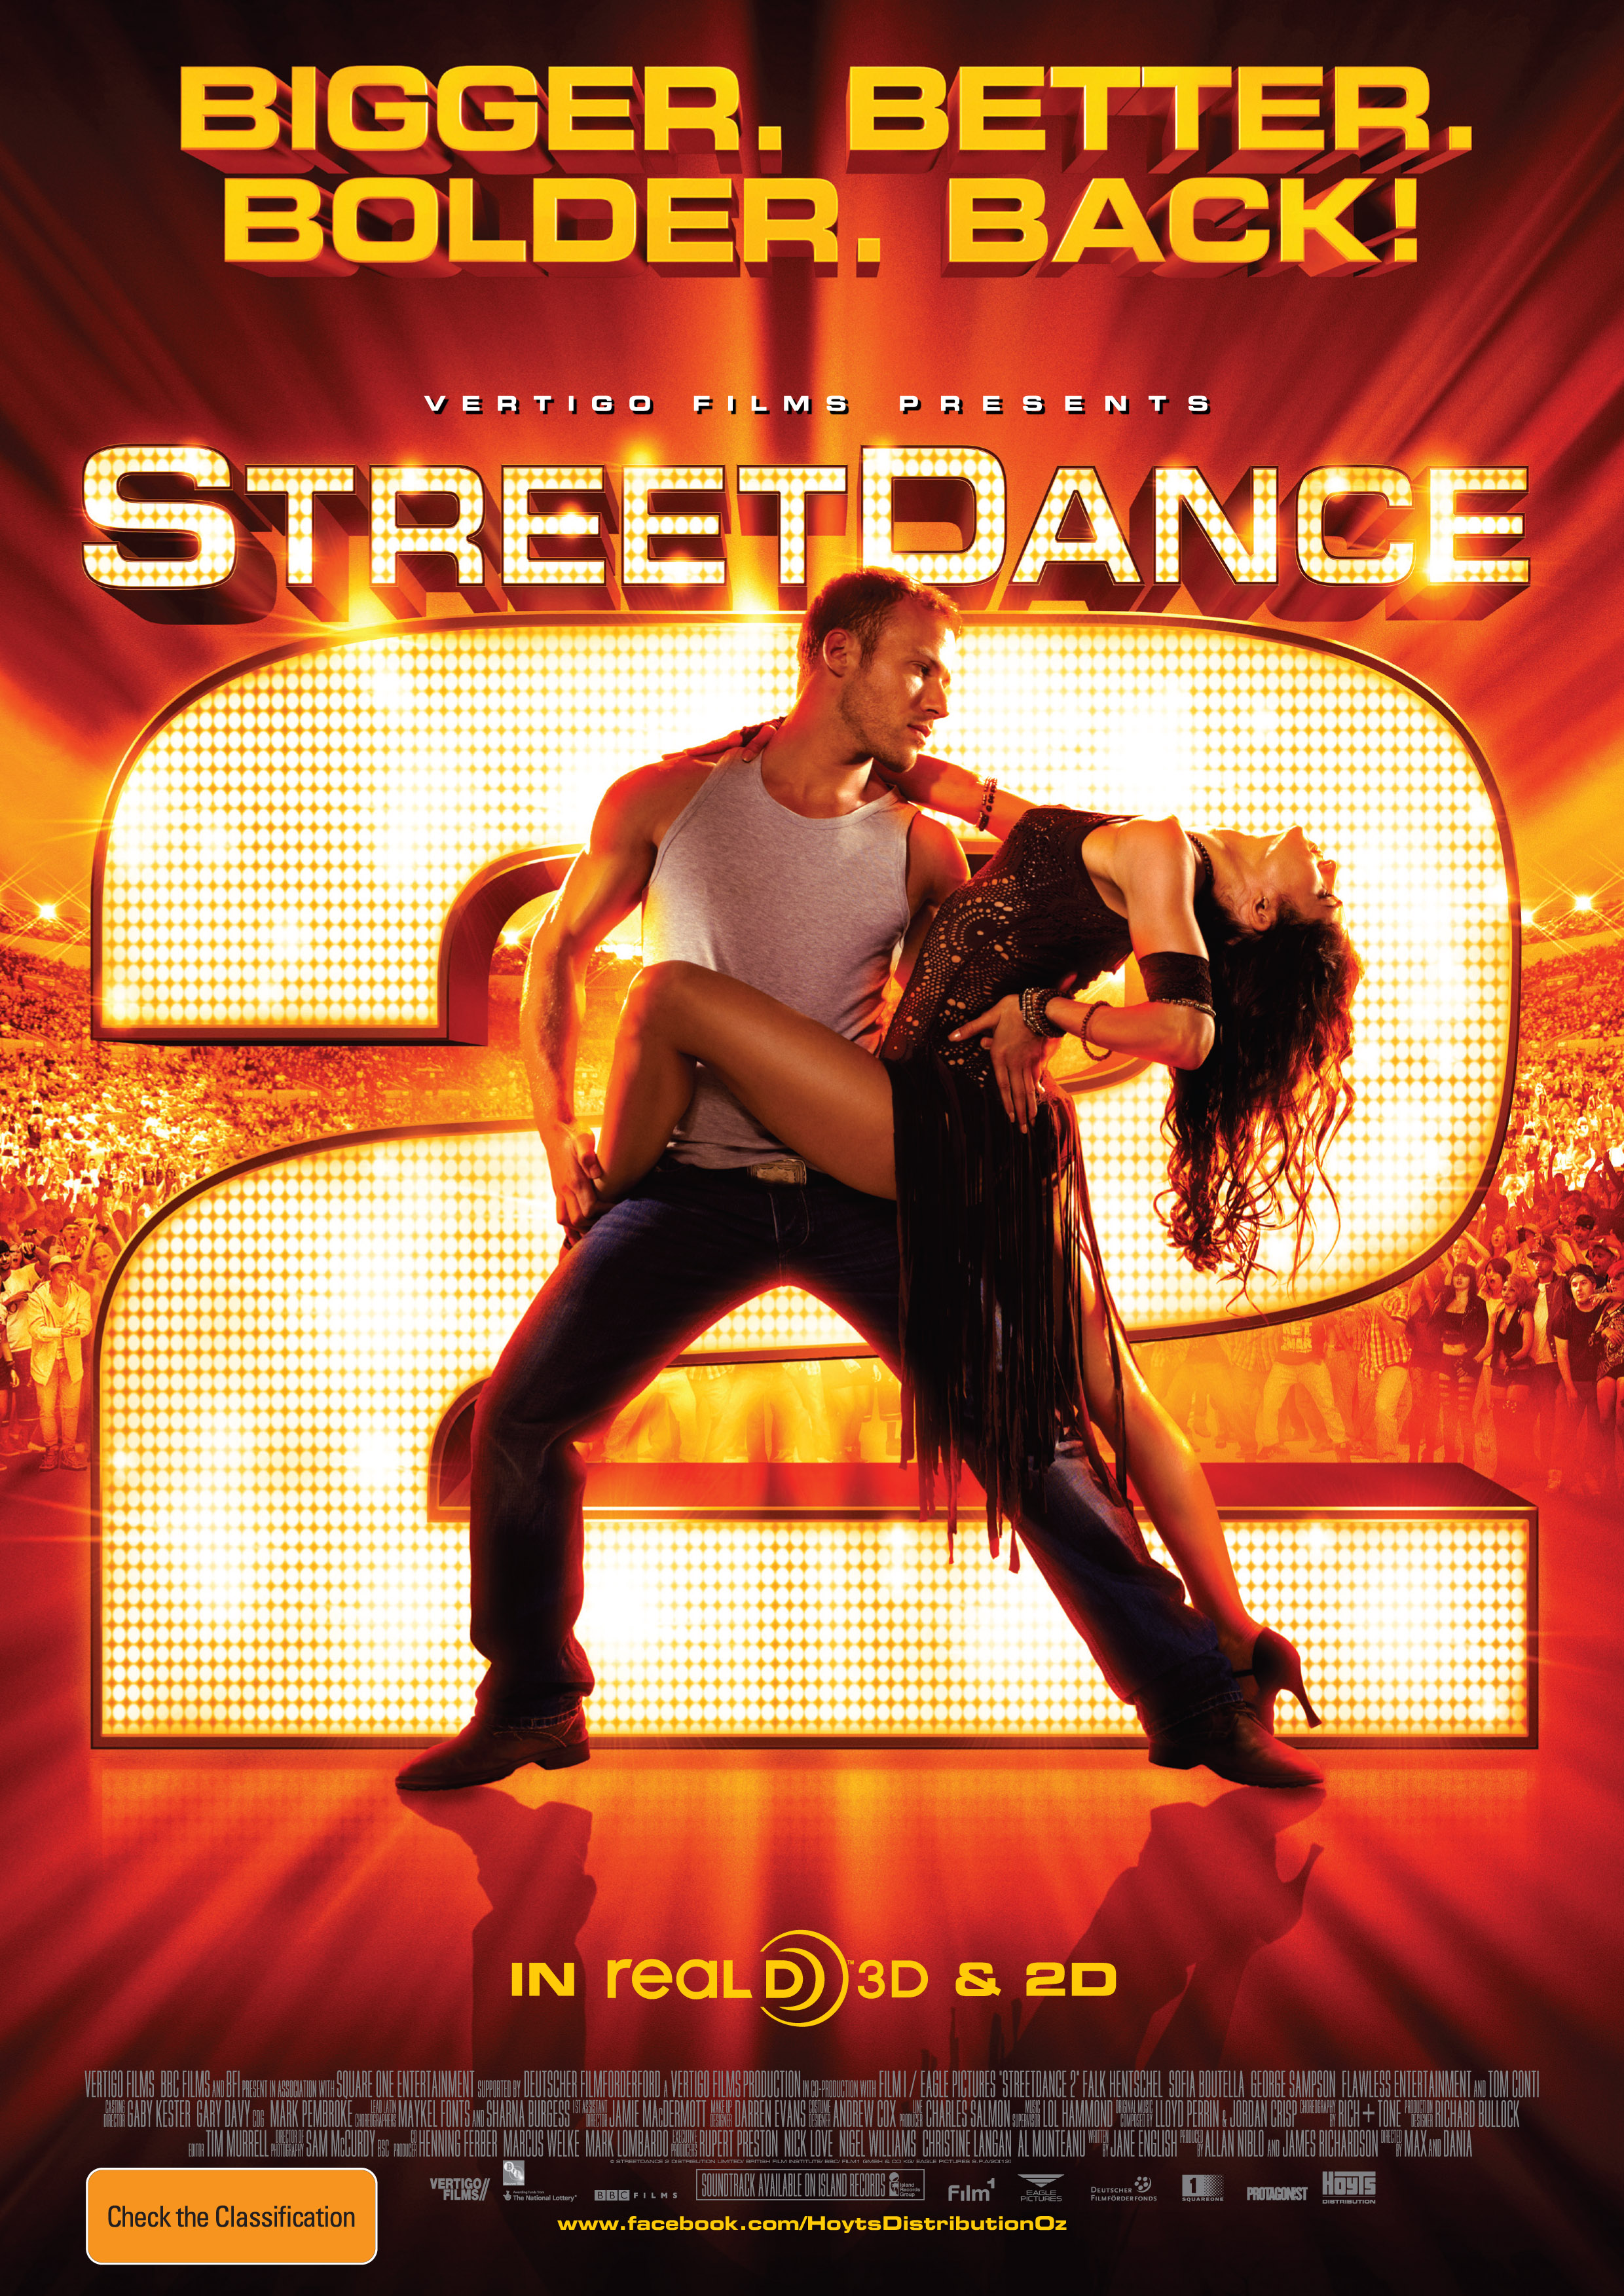 STREETDANCE 2 3D: Movie ticket giveaway | Dance Life